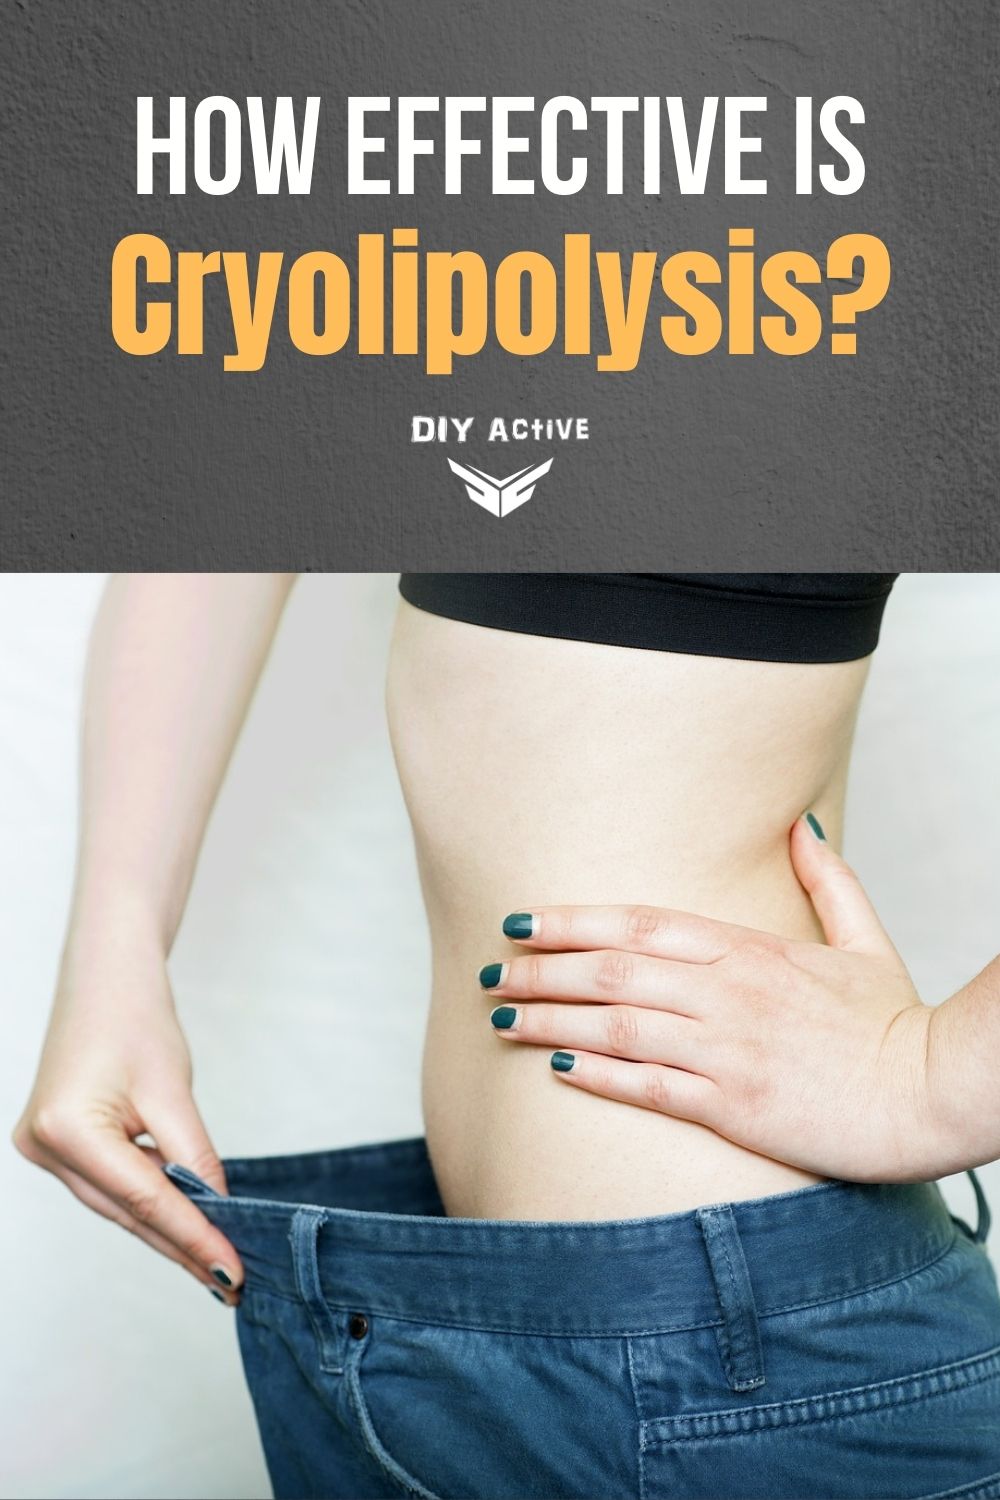 How Effective is Cryolipolysis?